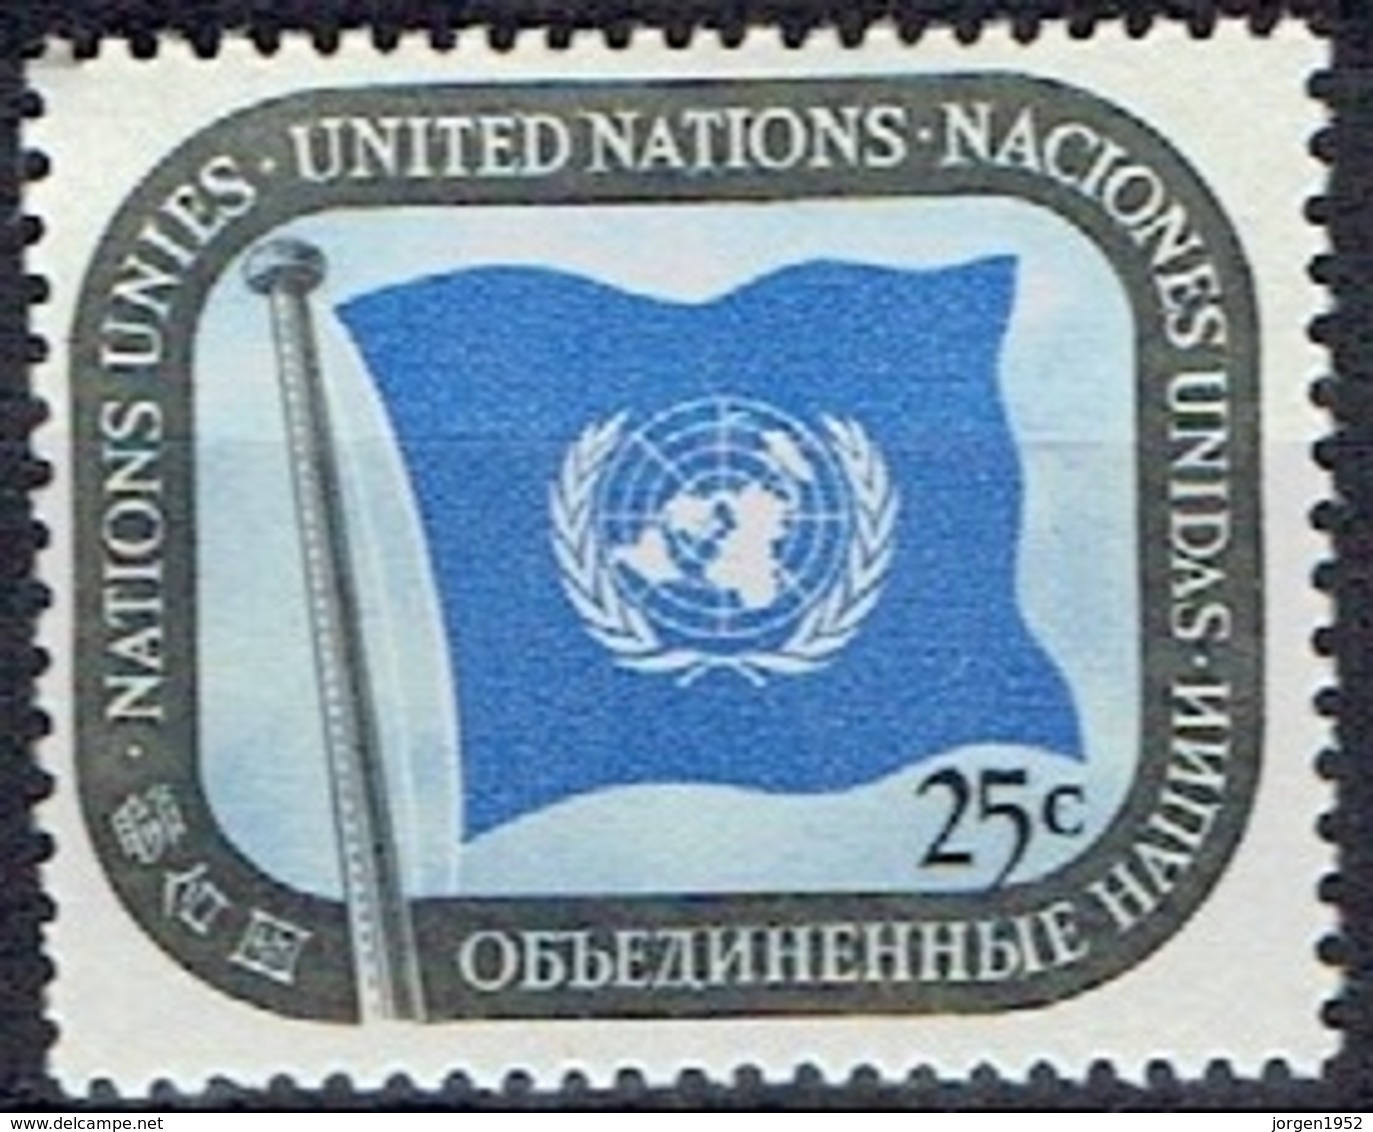 UNITED NATIONS # NEW YORK FROM 1951 STAMPWORLD 9* - Ungebraucht